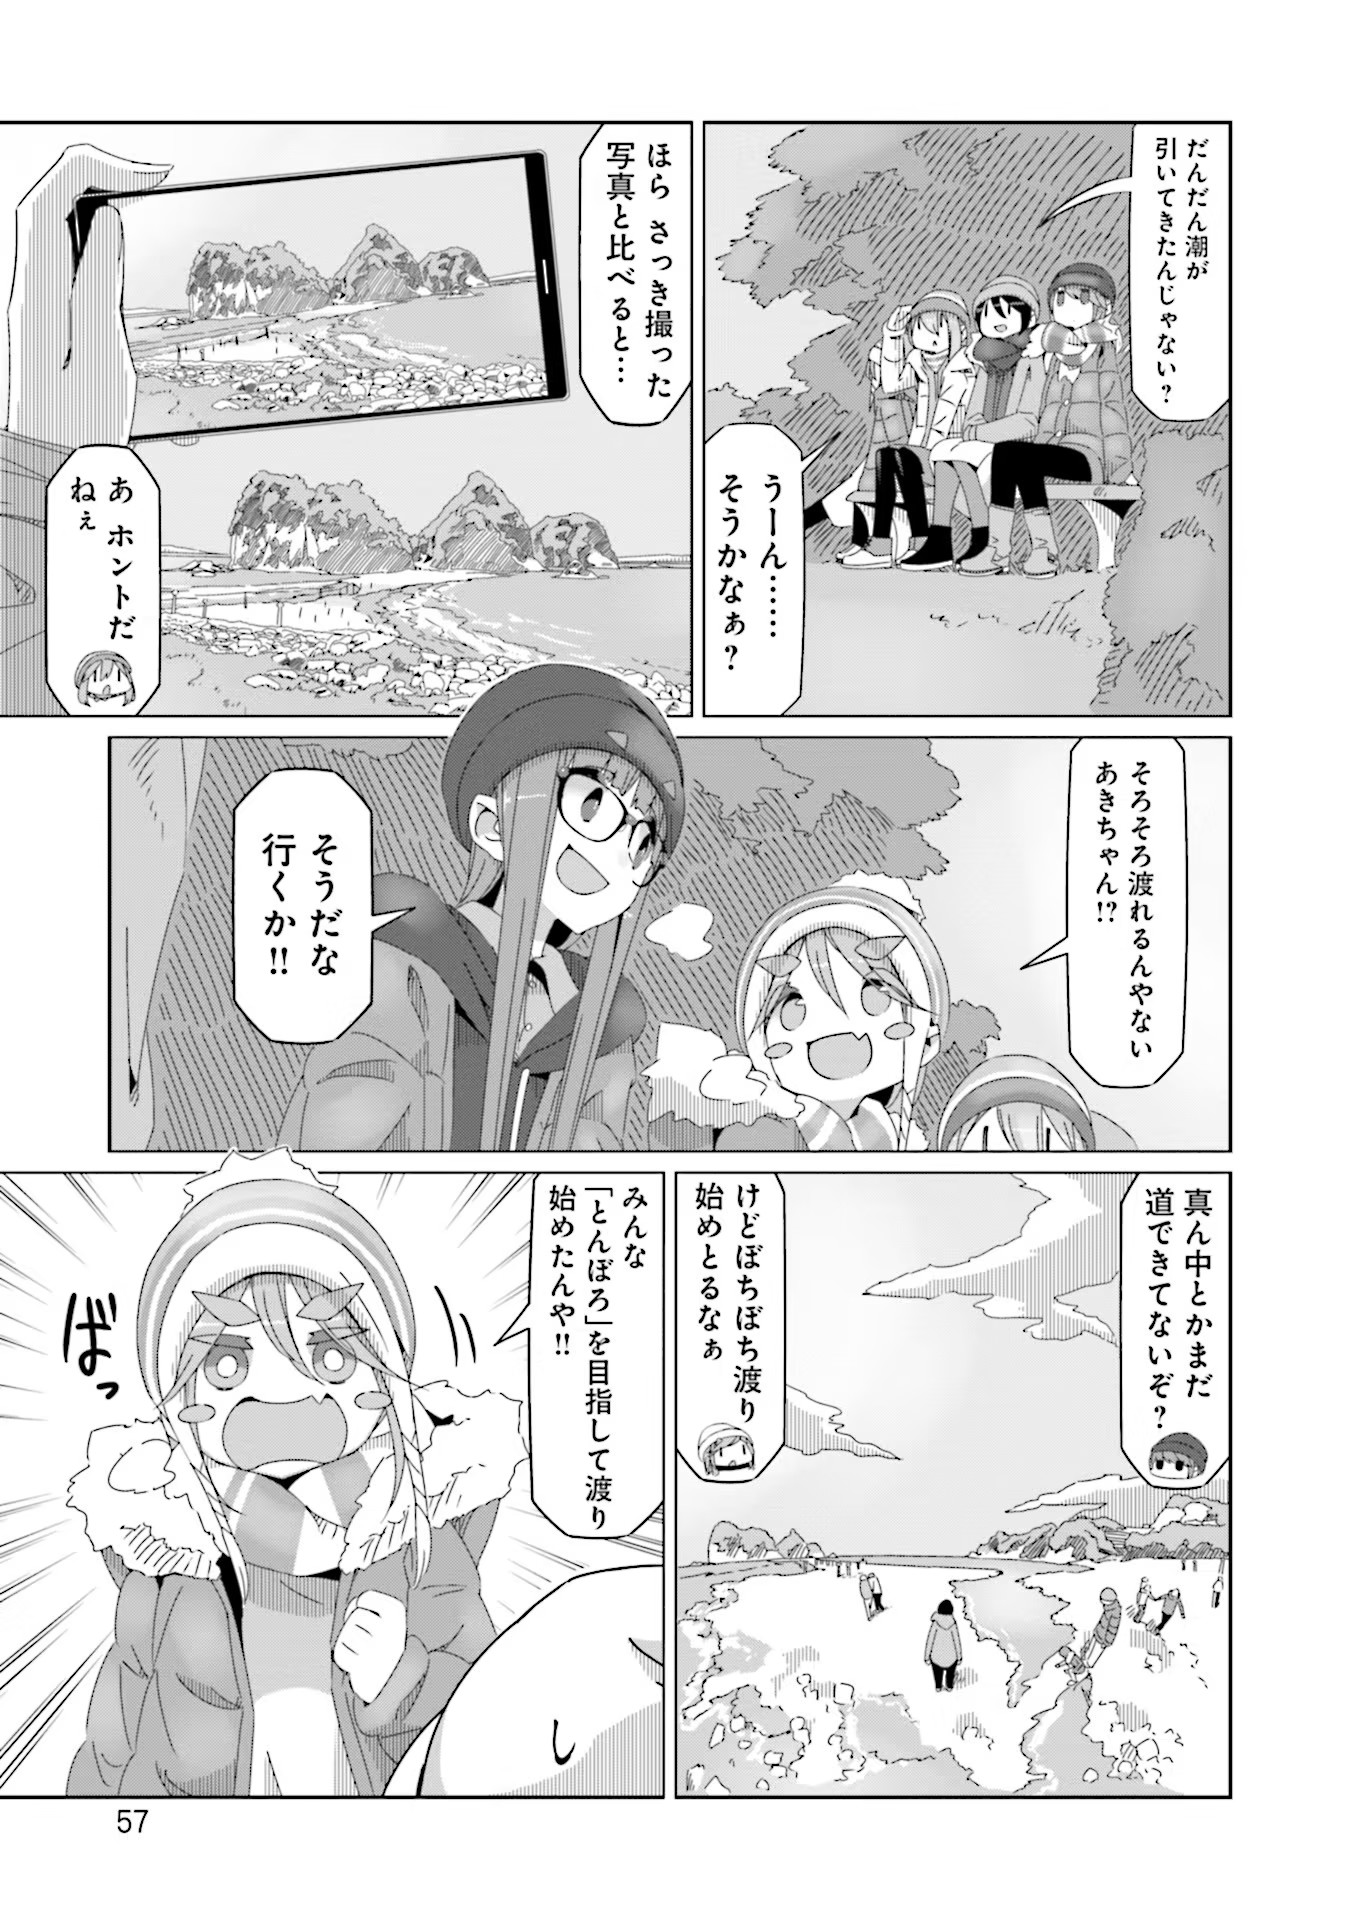 Yuru Camp - Chapter 49 - Page 3